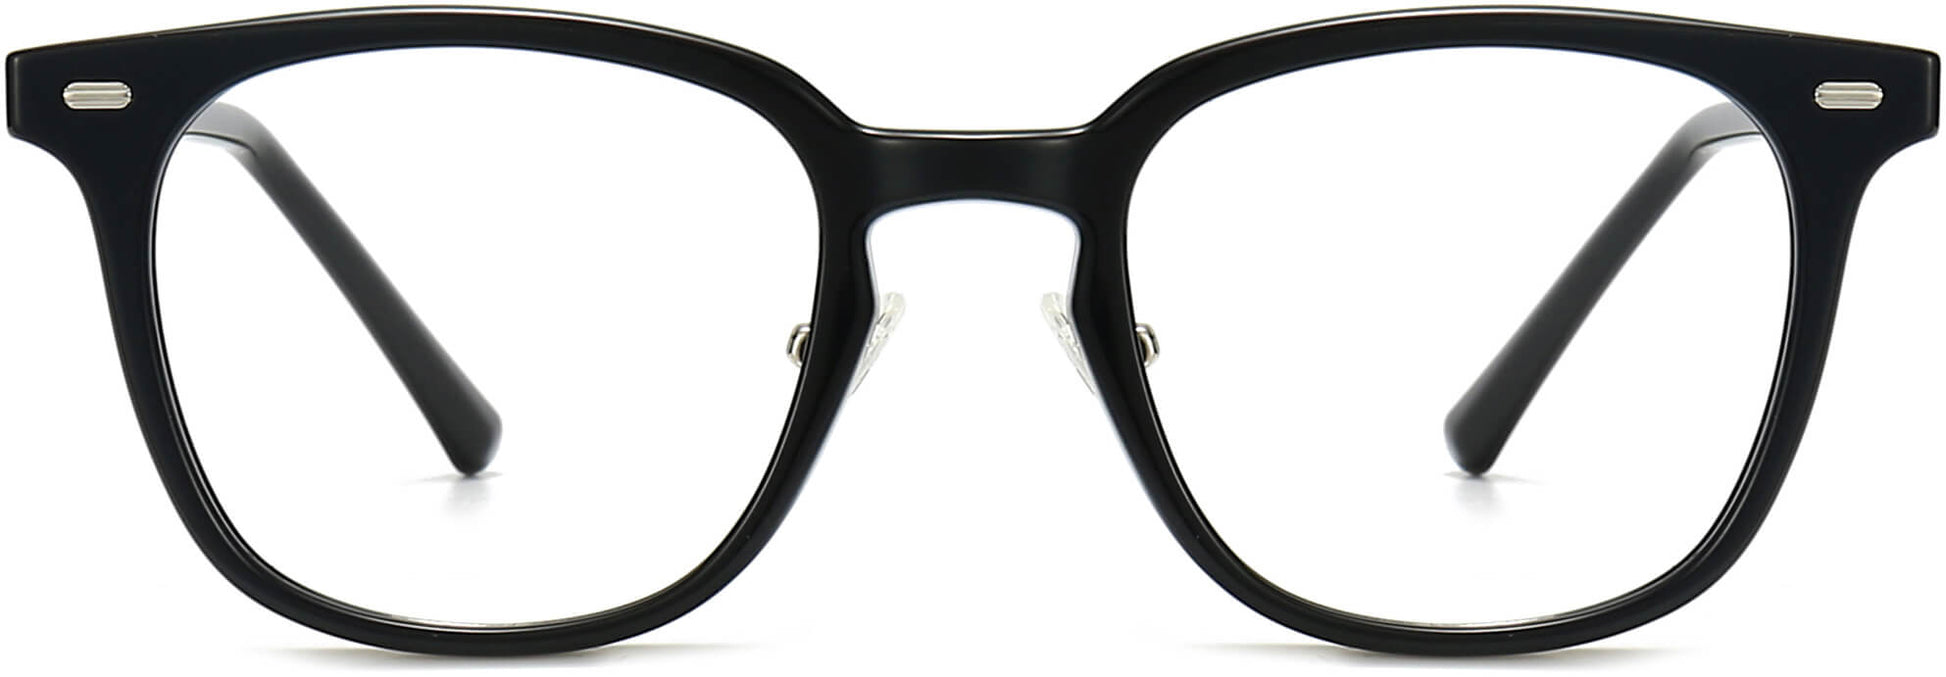 Braylon Round Black Eyeglasses from ANRRI, front view